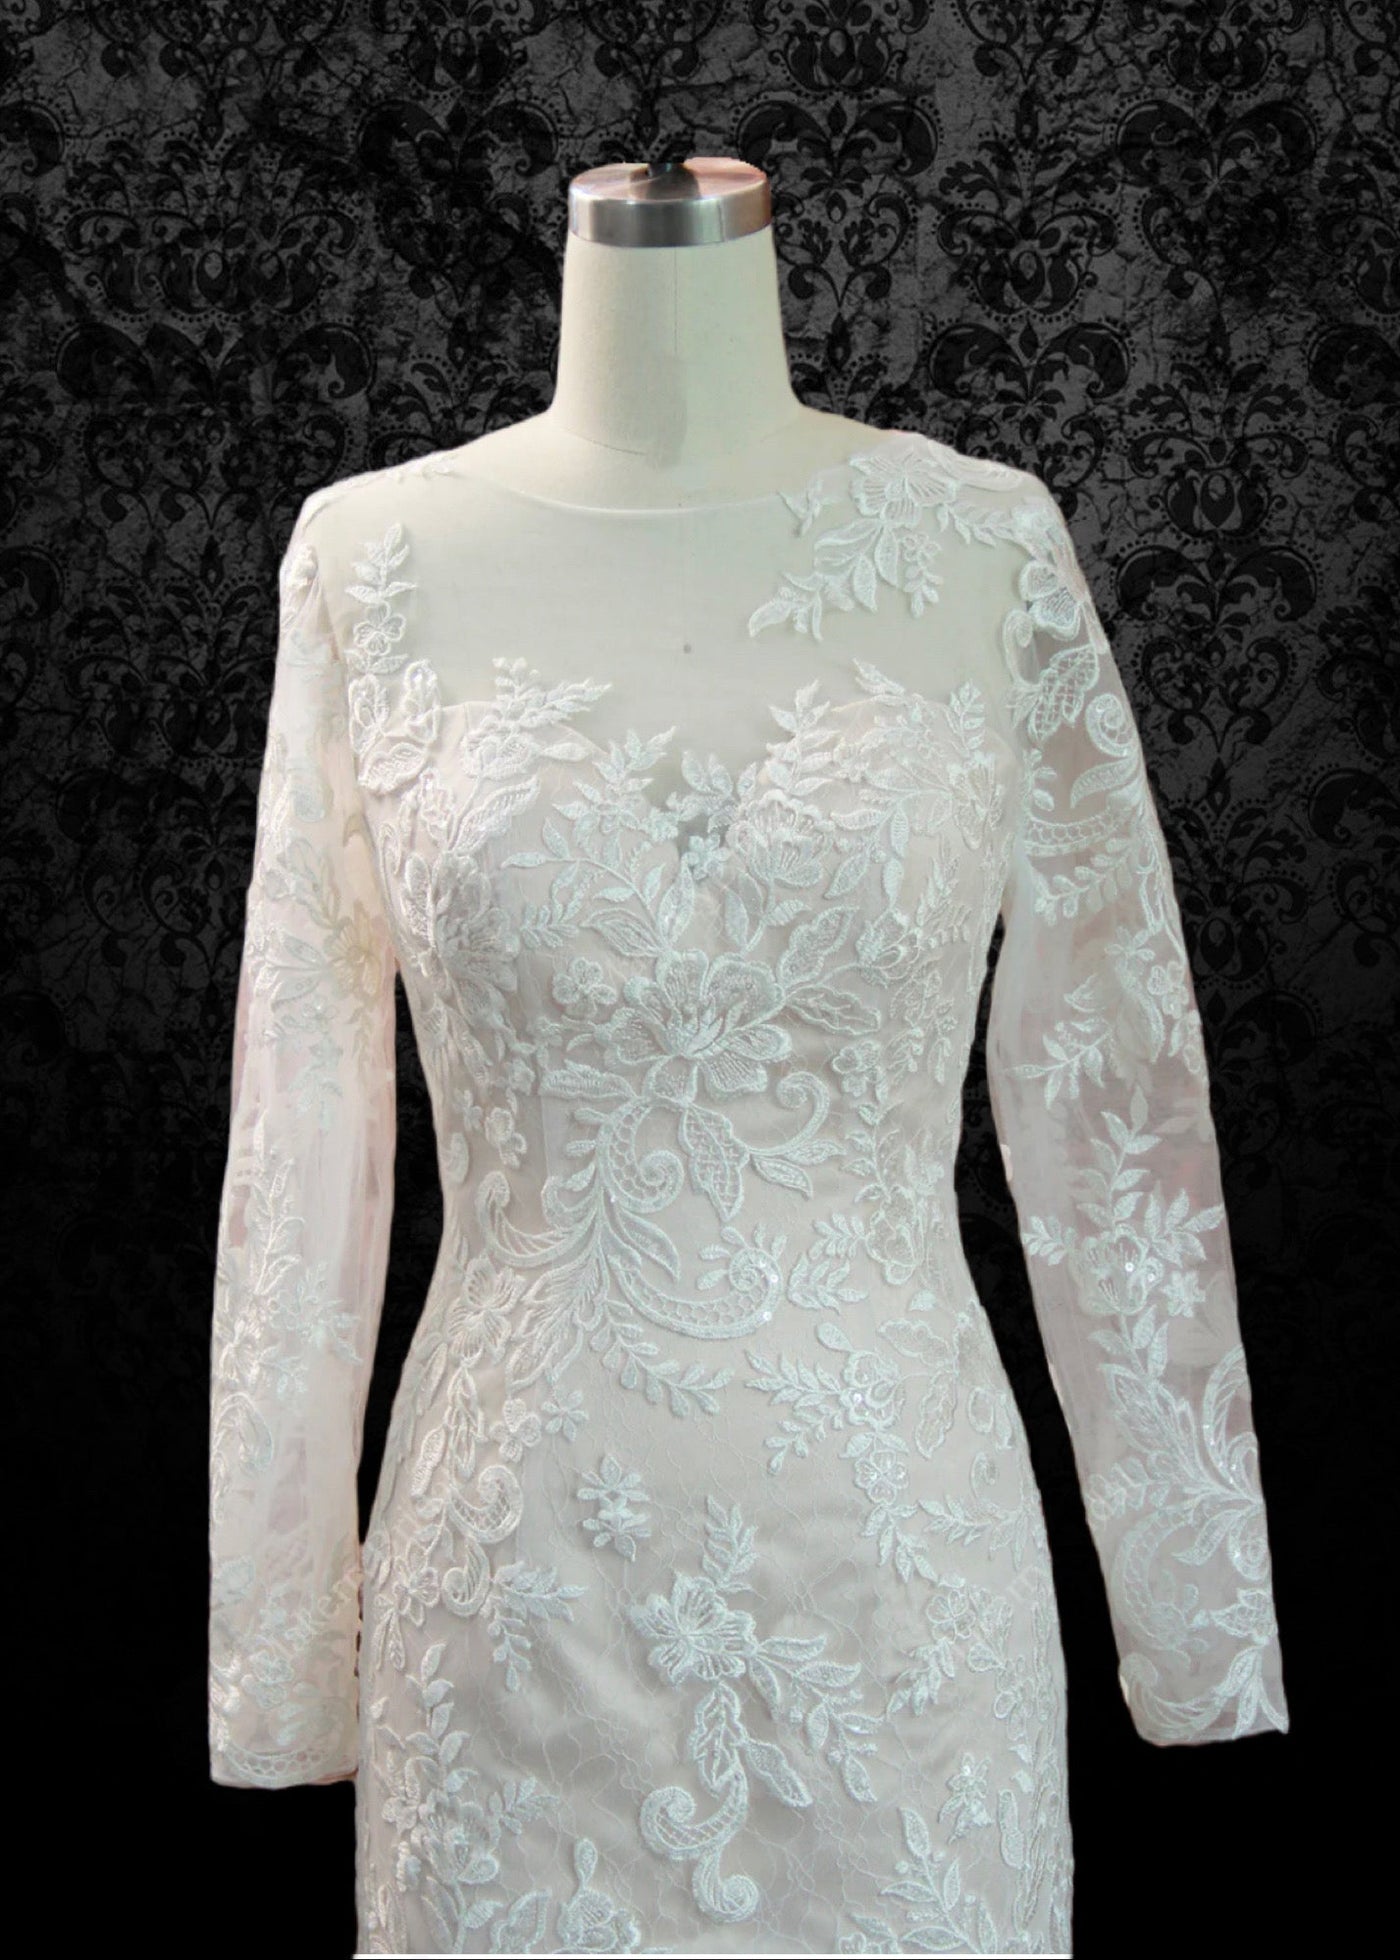 Modest Lace V-Neck Embroidery Mermaid Wedding Dress With Long Sleeves - Plus Size - WonderlandByLilian